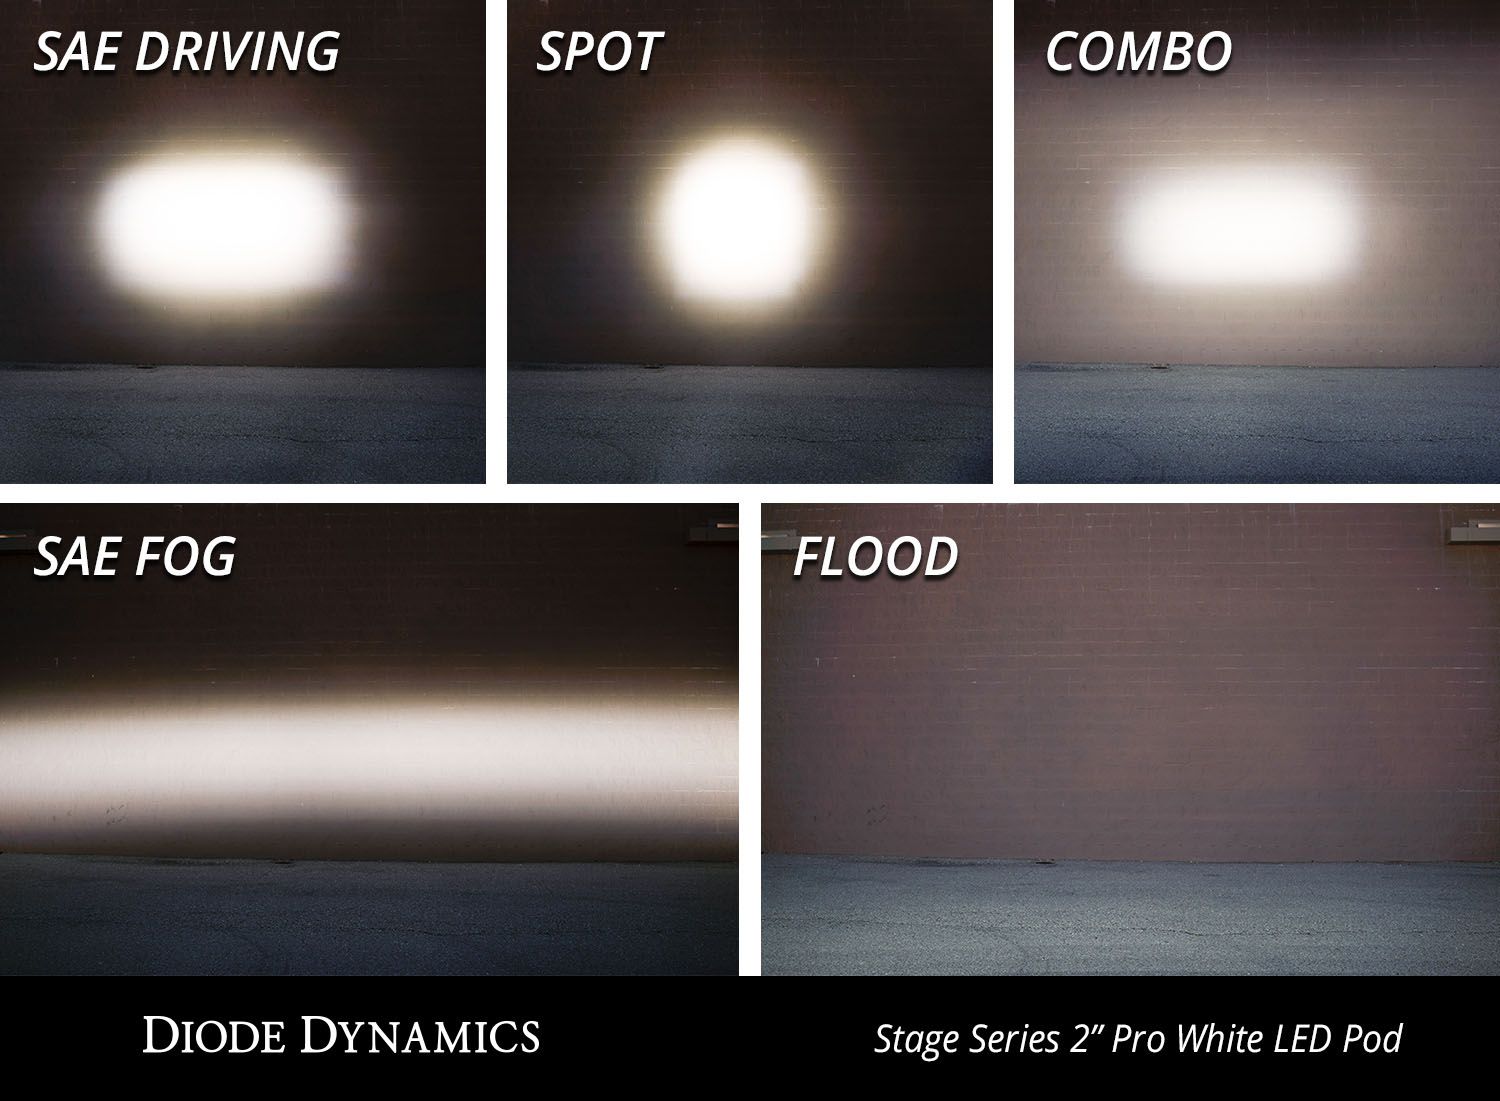 Stage Series 2" SAE/DOT White Sport Standard LED Pod (one)